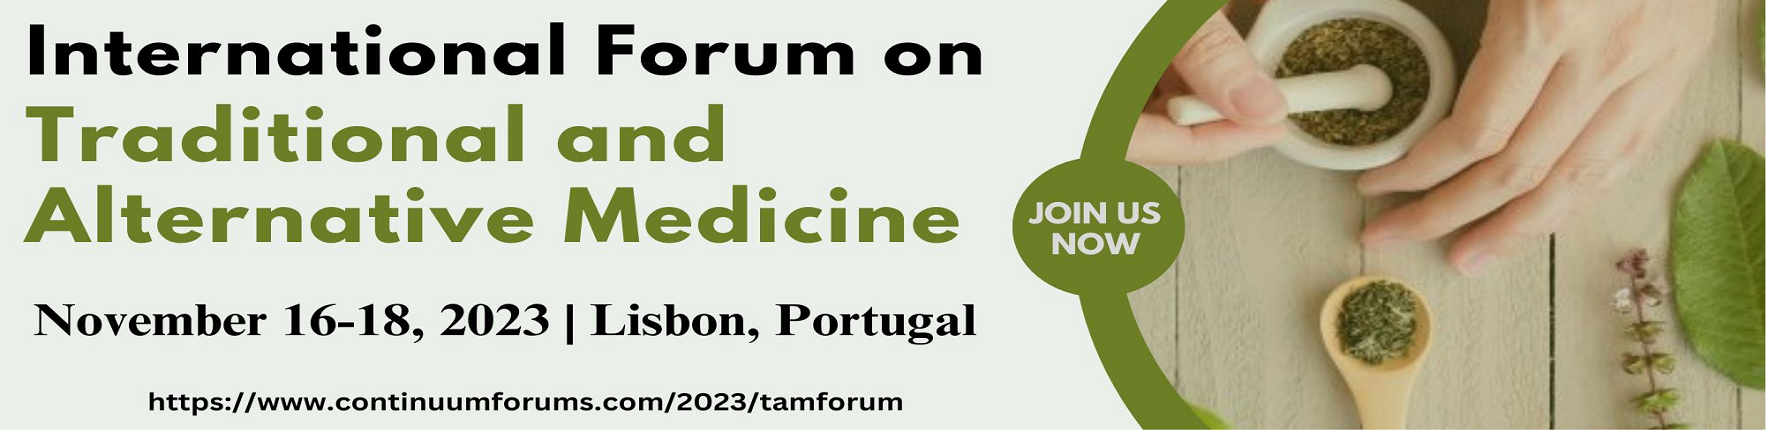 traditional and alternative medicine, Lisbon, Leiria, Portugal